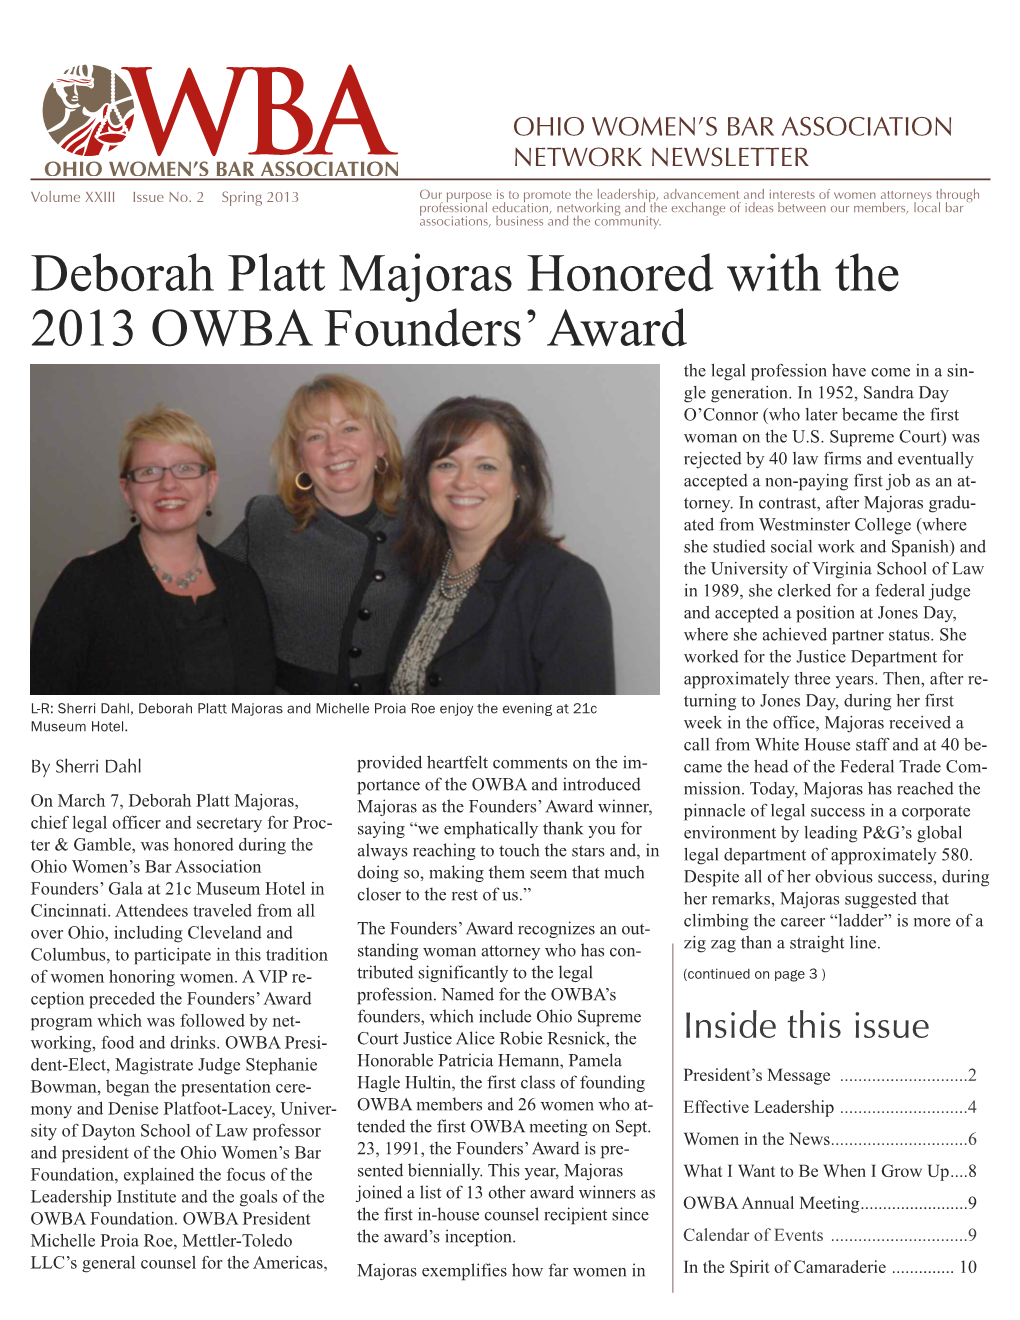 Deborah Platt Majoras Honored with the 2013 OWBA Founders' Award